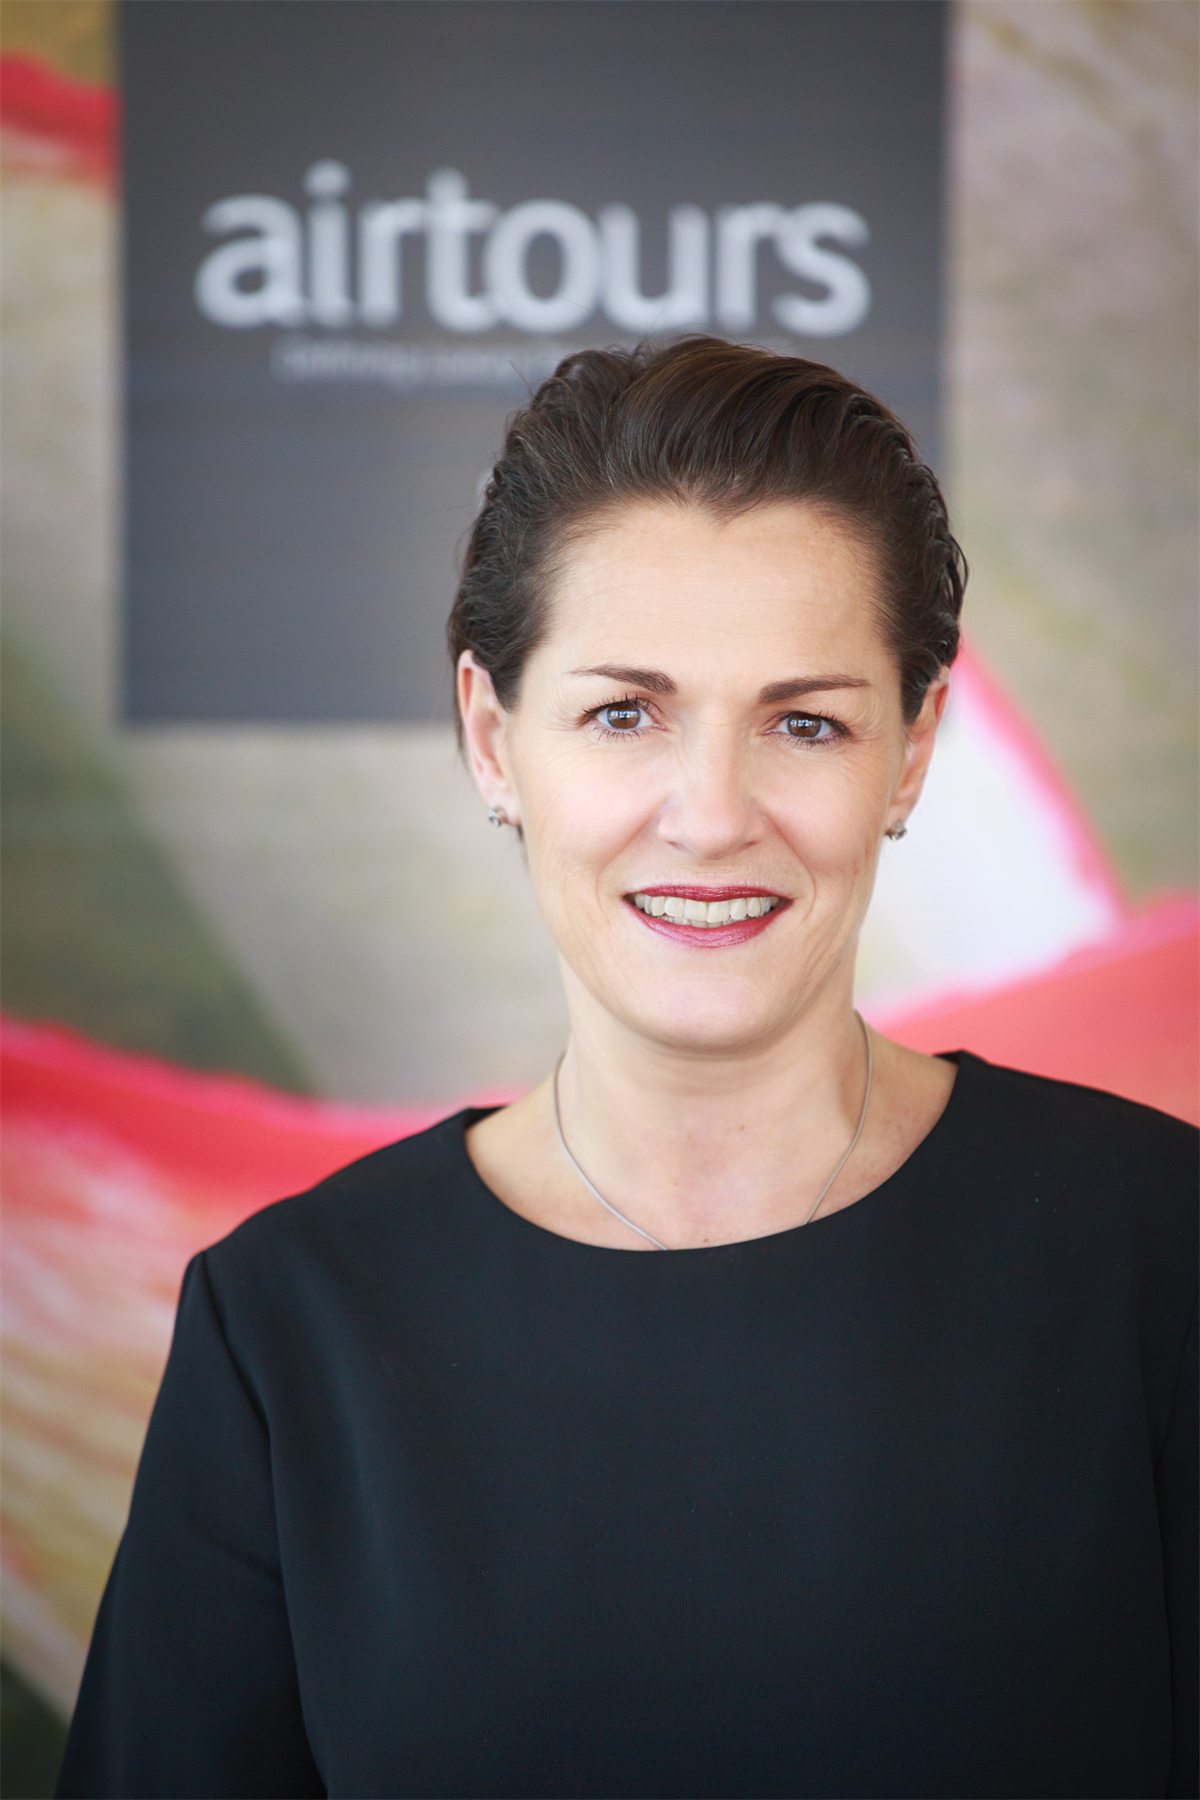 Claudia Janner-Moser - Marke airtours und TUI Franchiser